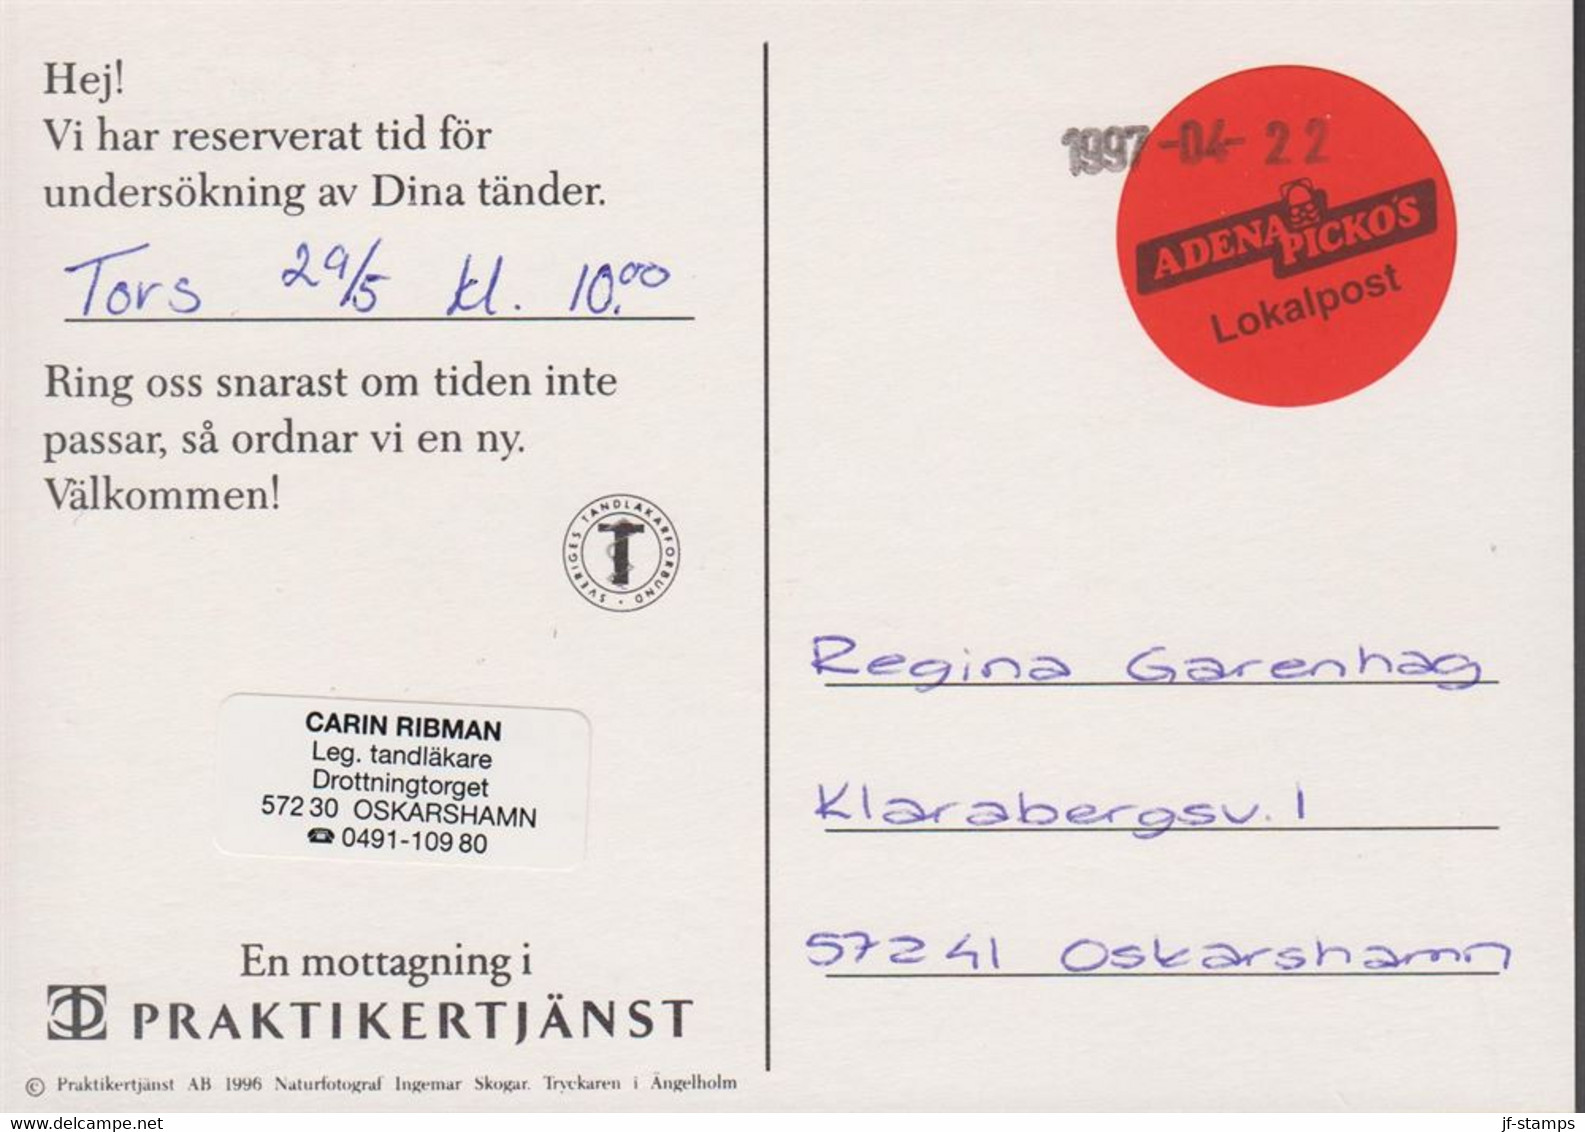 1997. SVERIGE. ADENA PICKOS Lokalpost In Oskarshamn. Red Seal On Post Card Cancelled 1997-04-22. Reservati... - JF520088 - Ortsausgaben